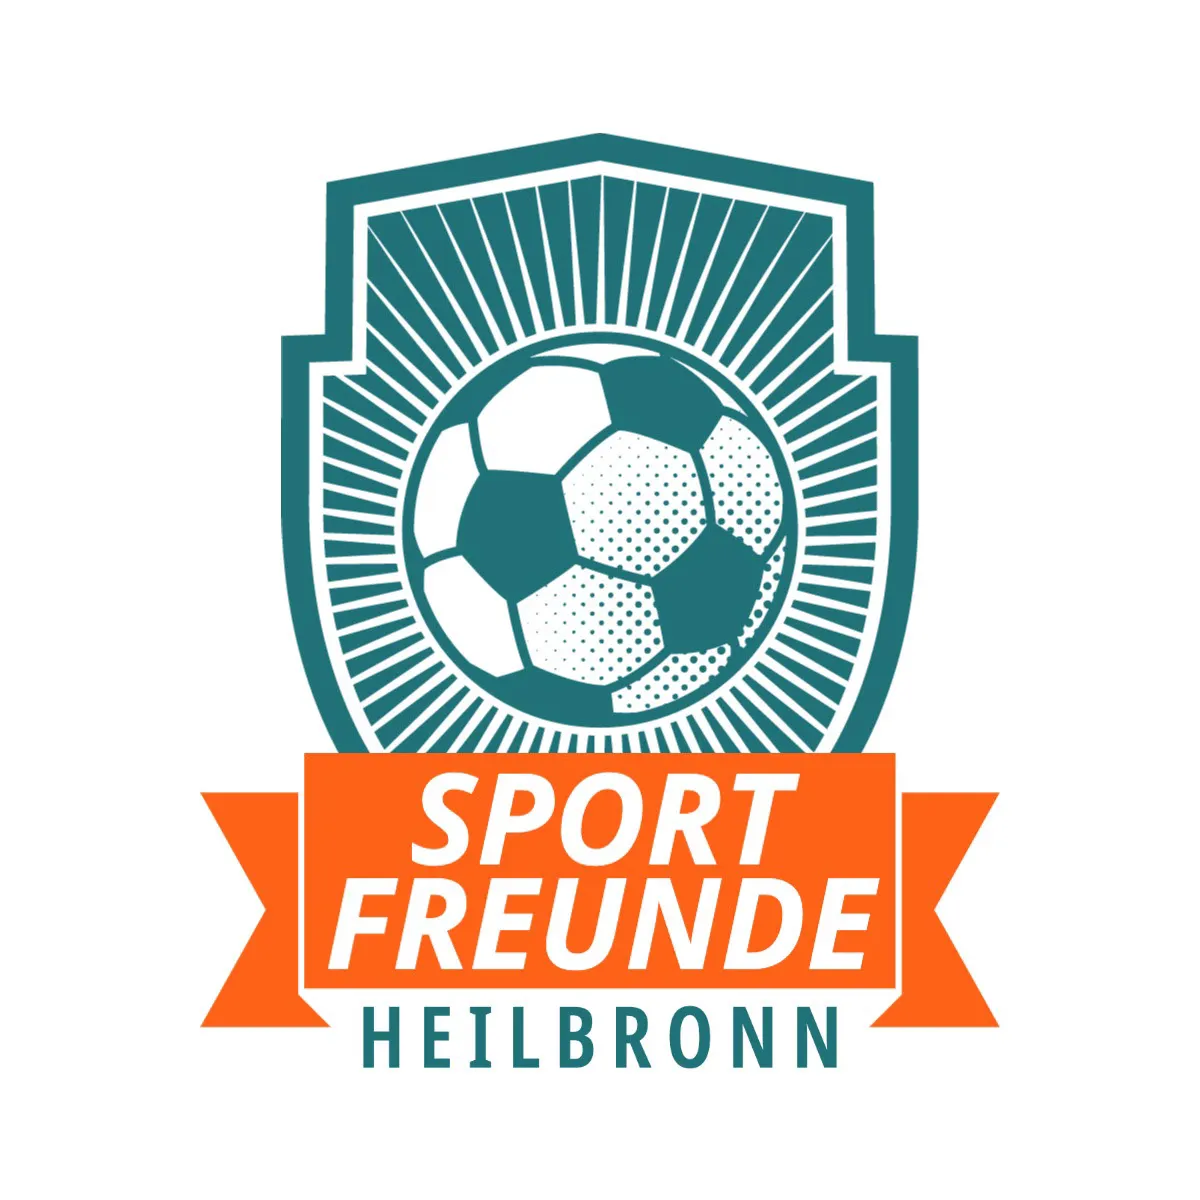 Teal and Orange Sports Soccer Logo